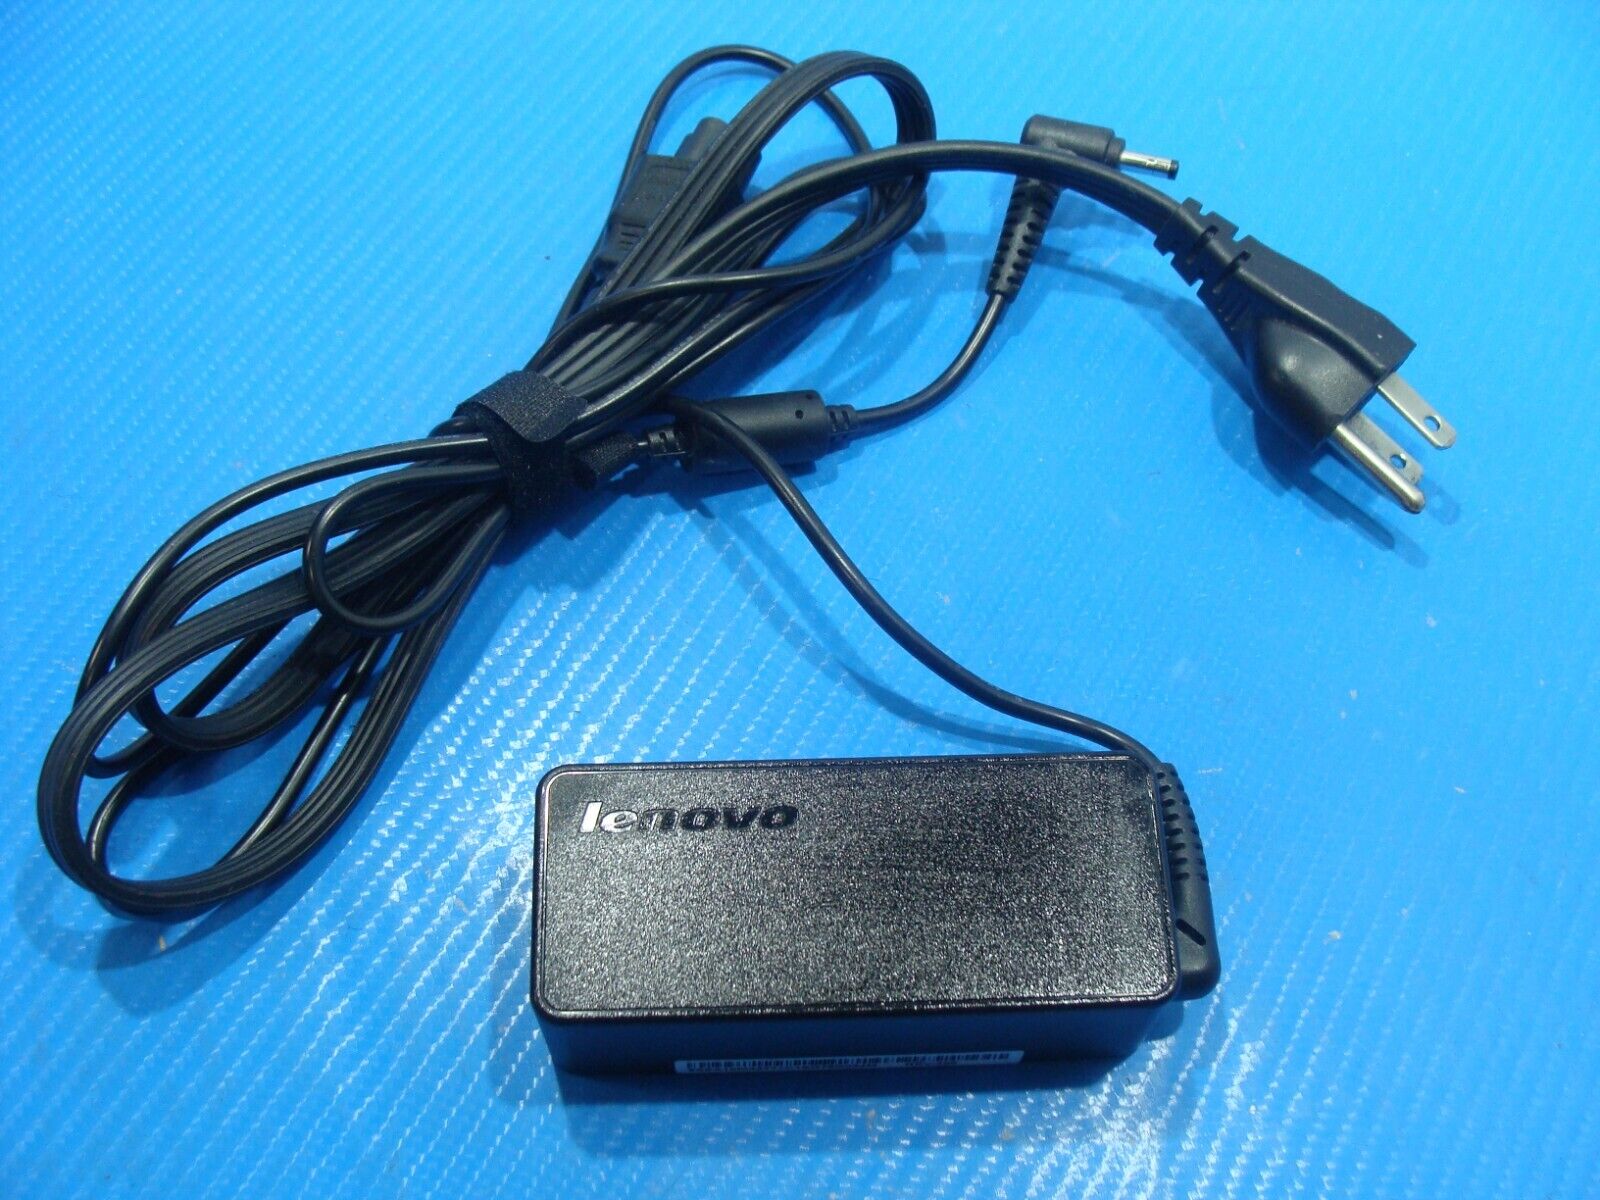 45W Genuine Lenovo Chromebook N22 N23 N42 AC Power Adapter Charger ADLX45NCC3A